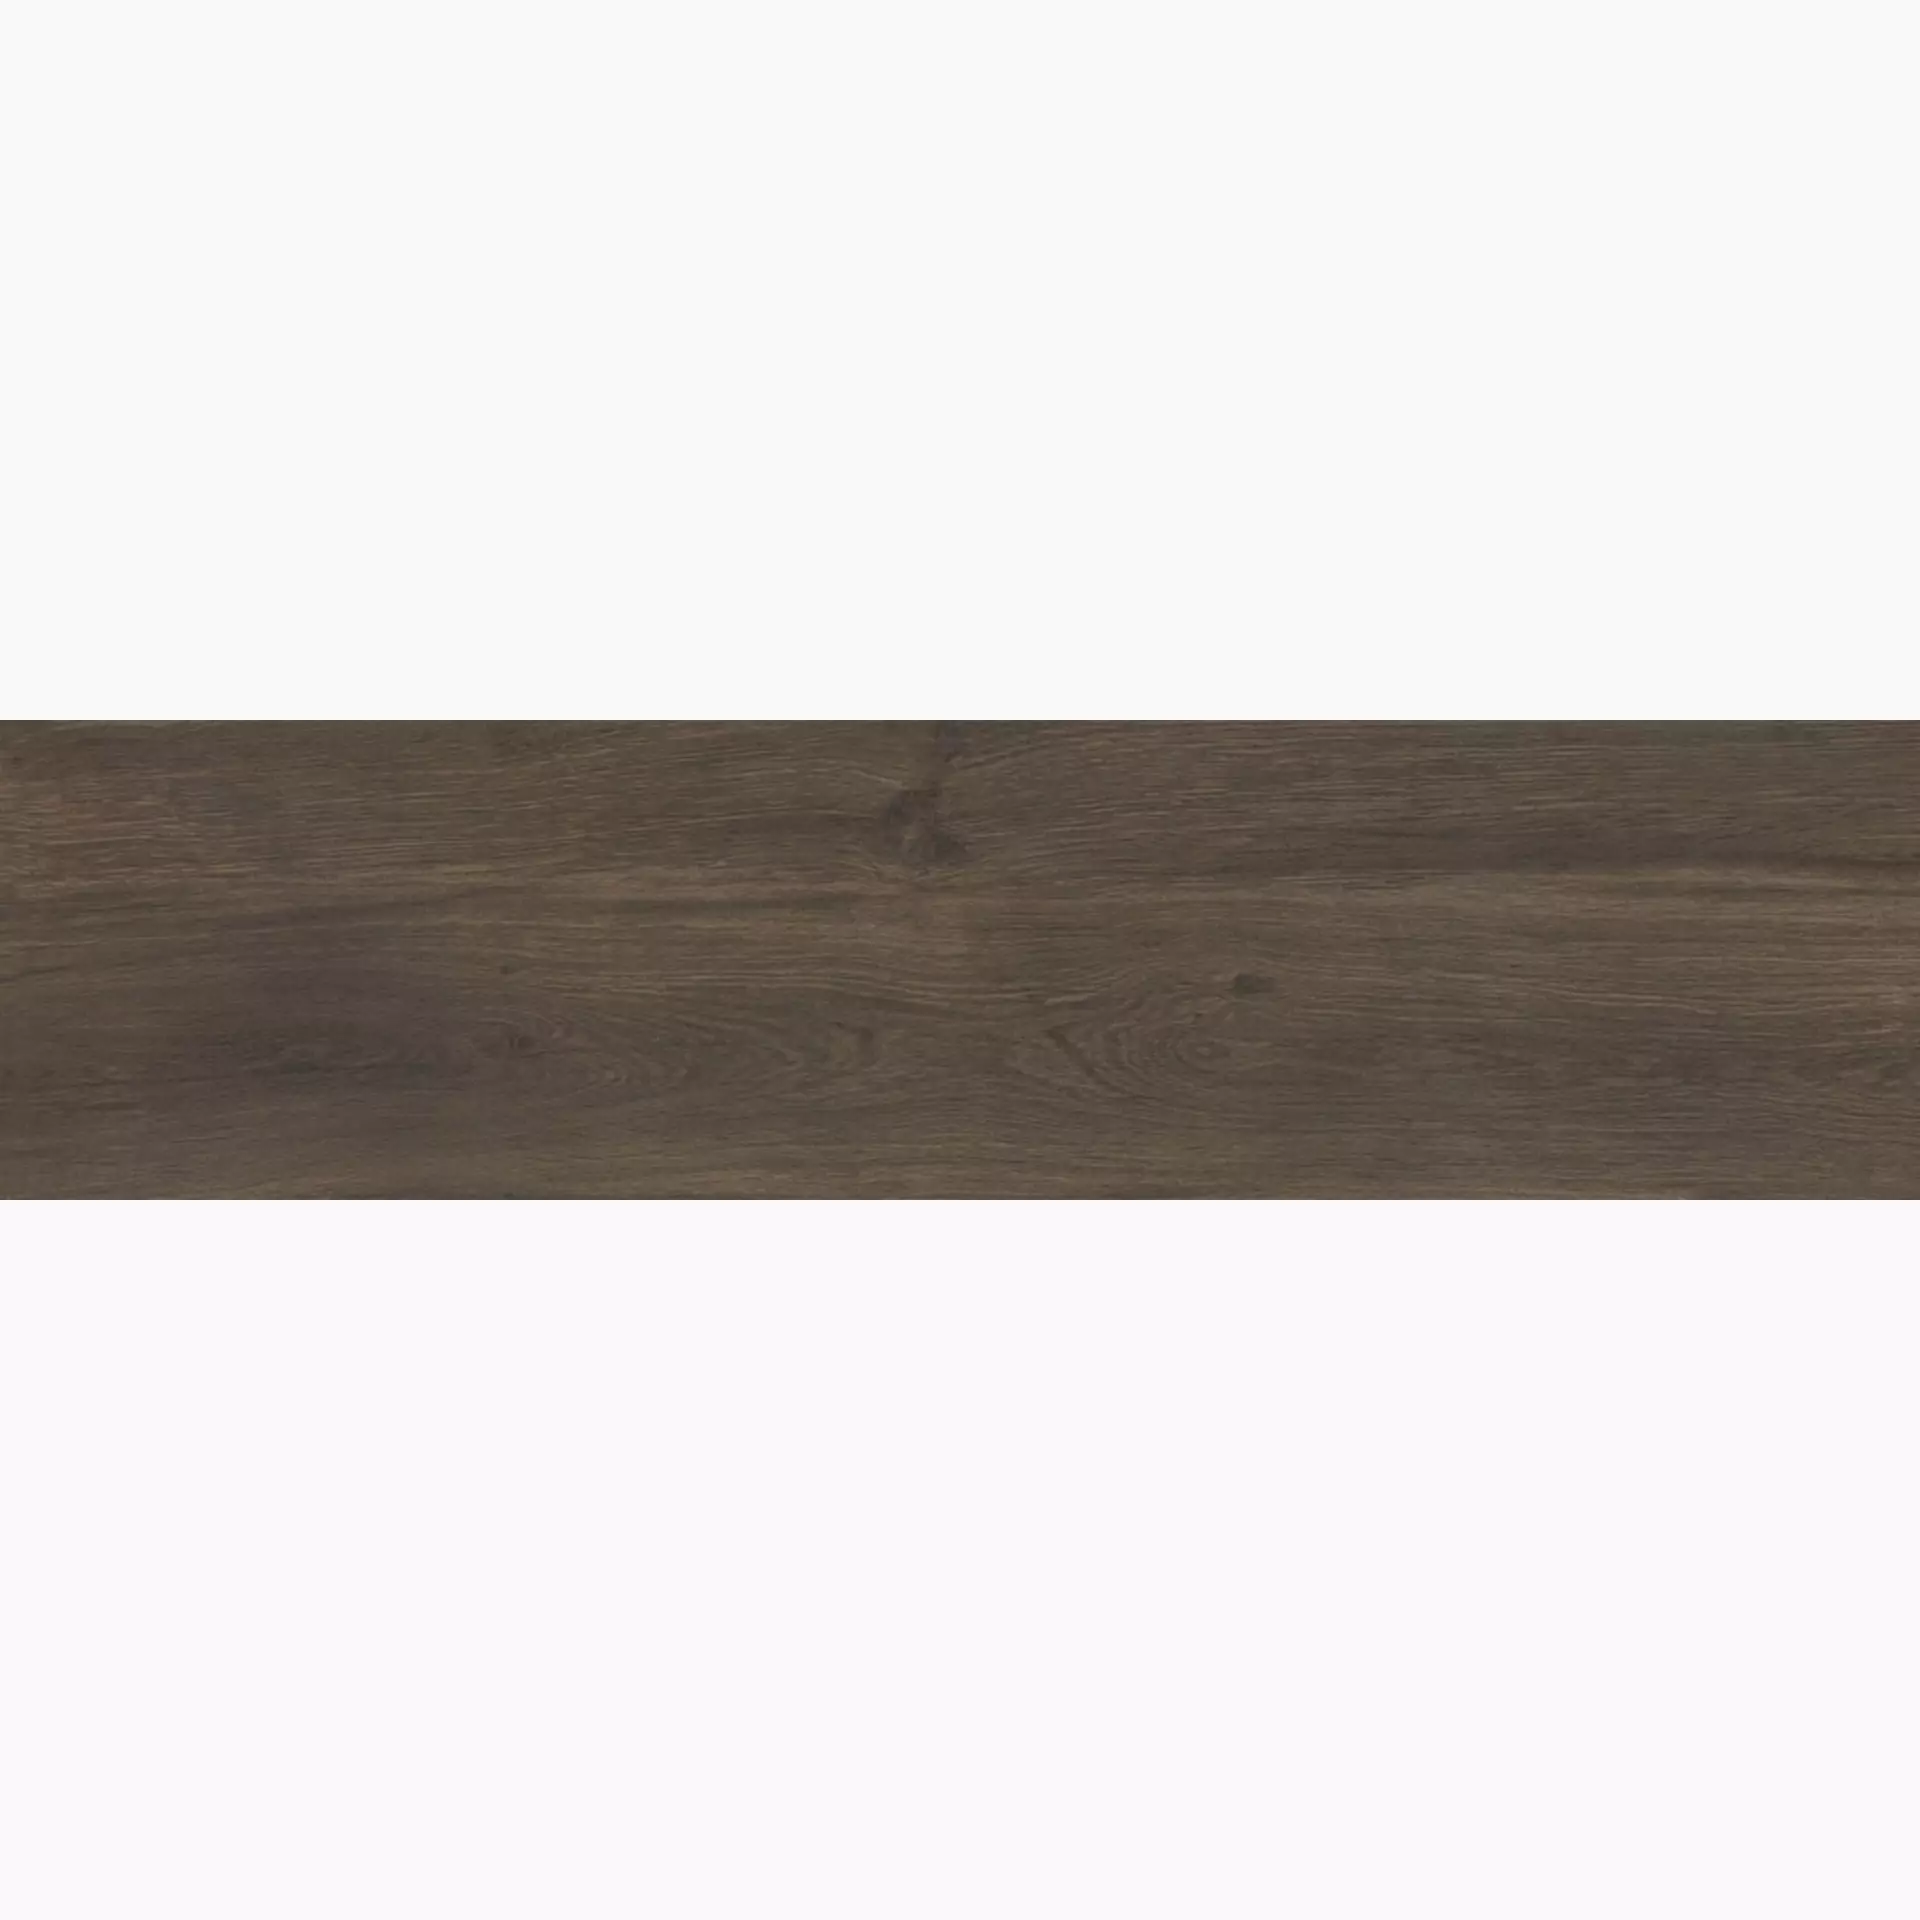 Rondine Bricola Ebano Naturale J85993 30x120cm rectified 9,5mm